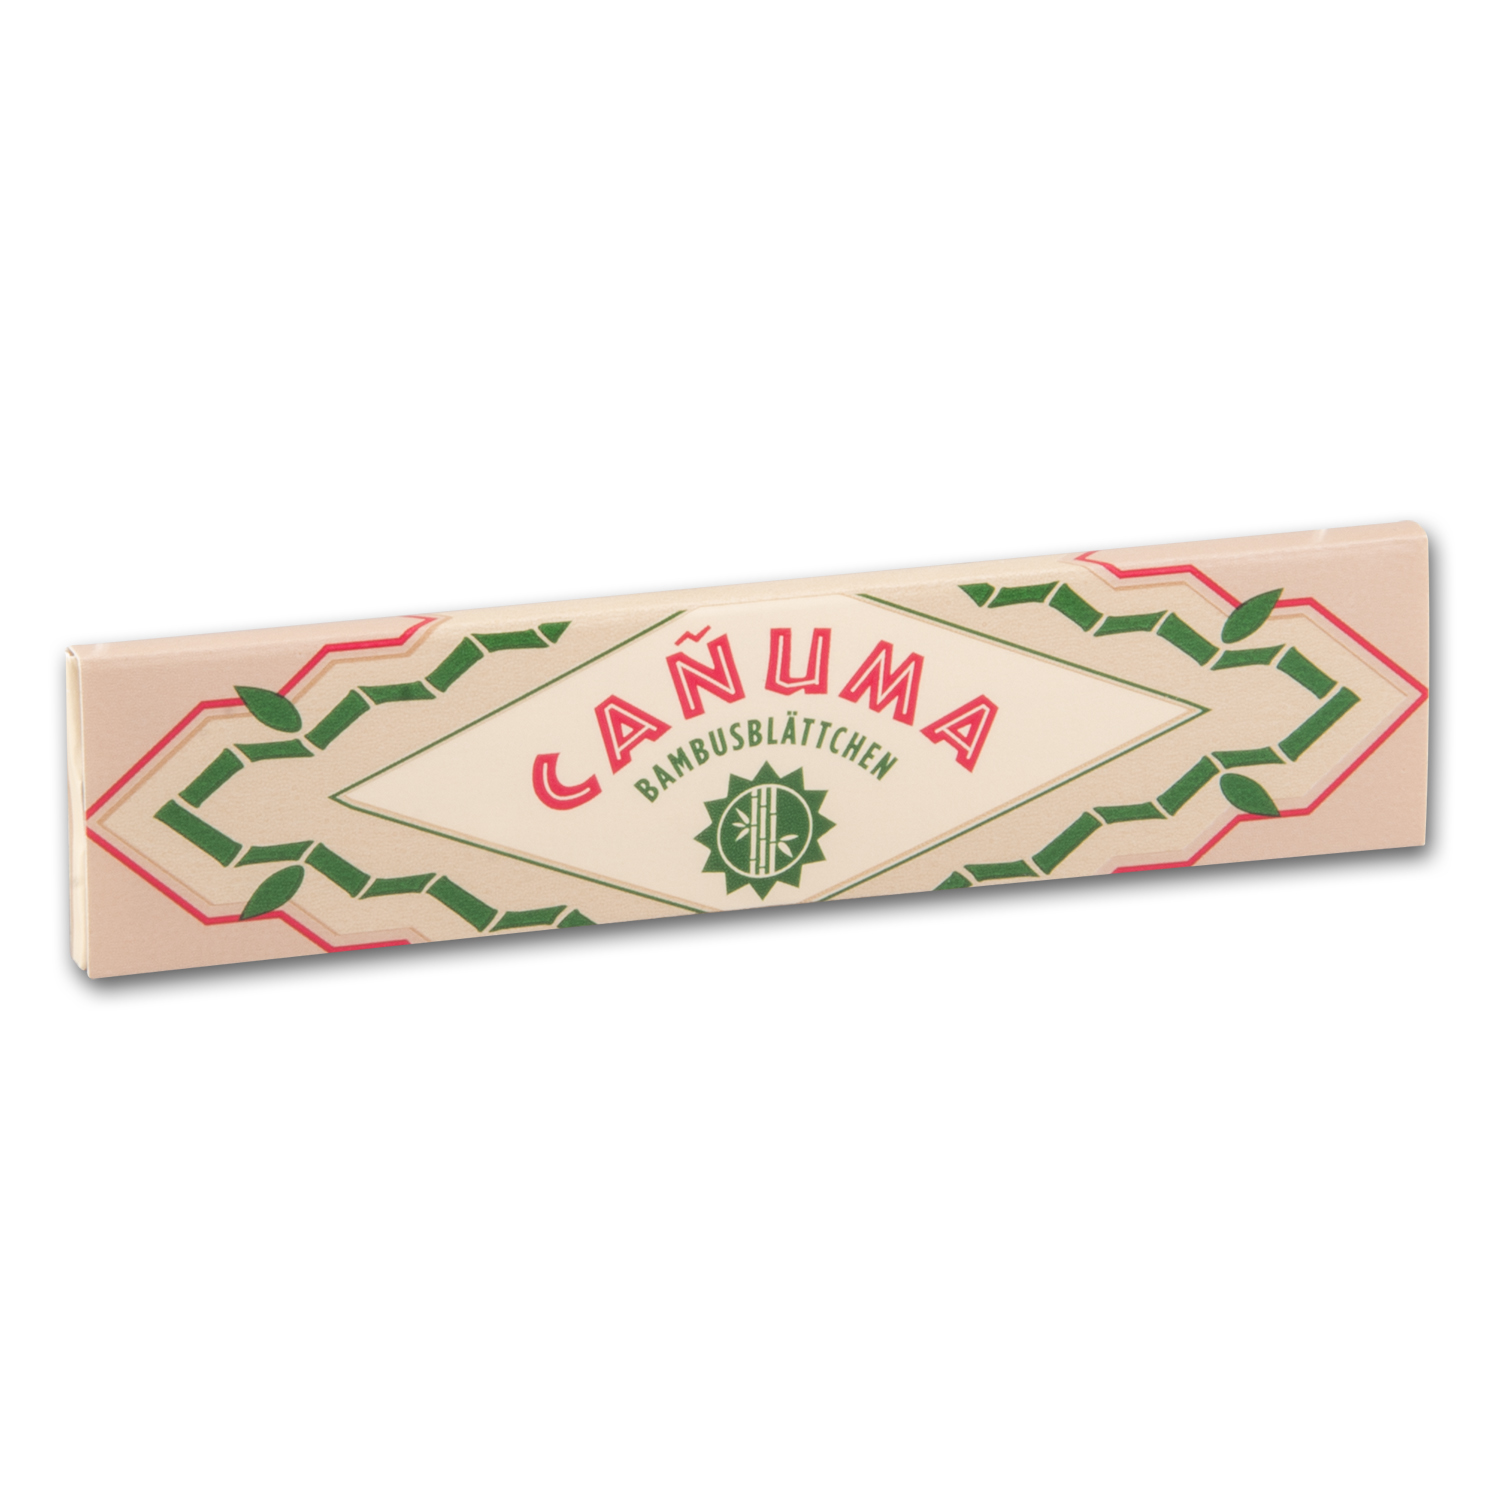 CANUMA by Rizla Bambusblättchen King Size Slims Zigarettenpapier 1x32 Blatt